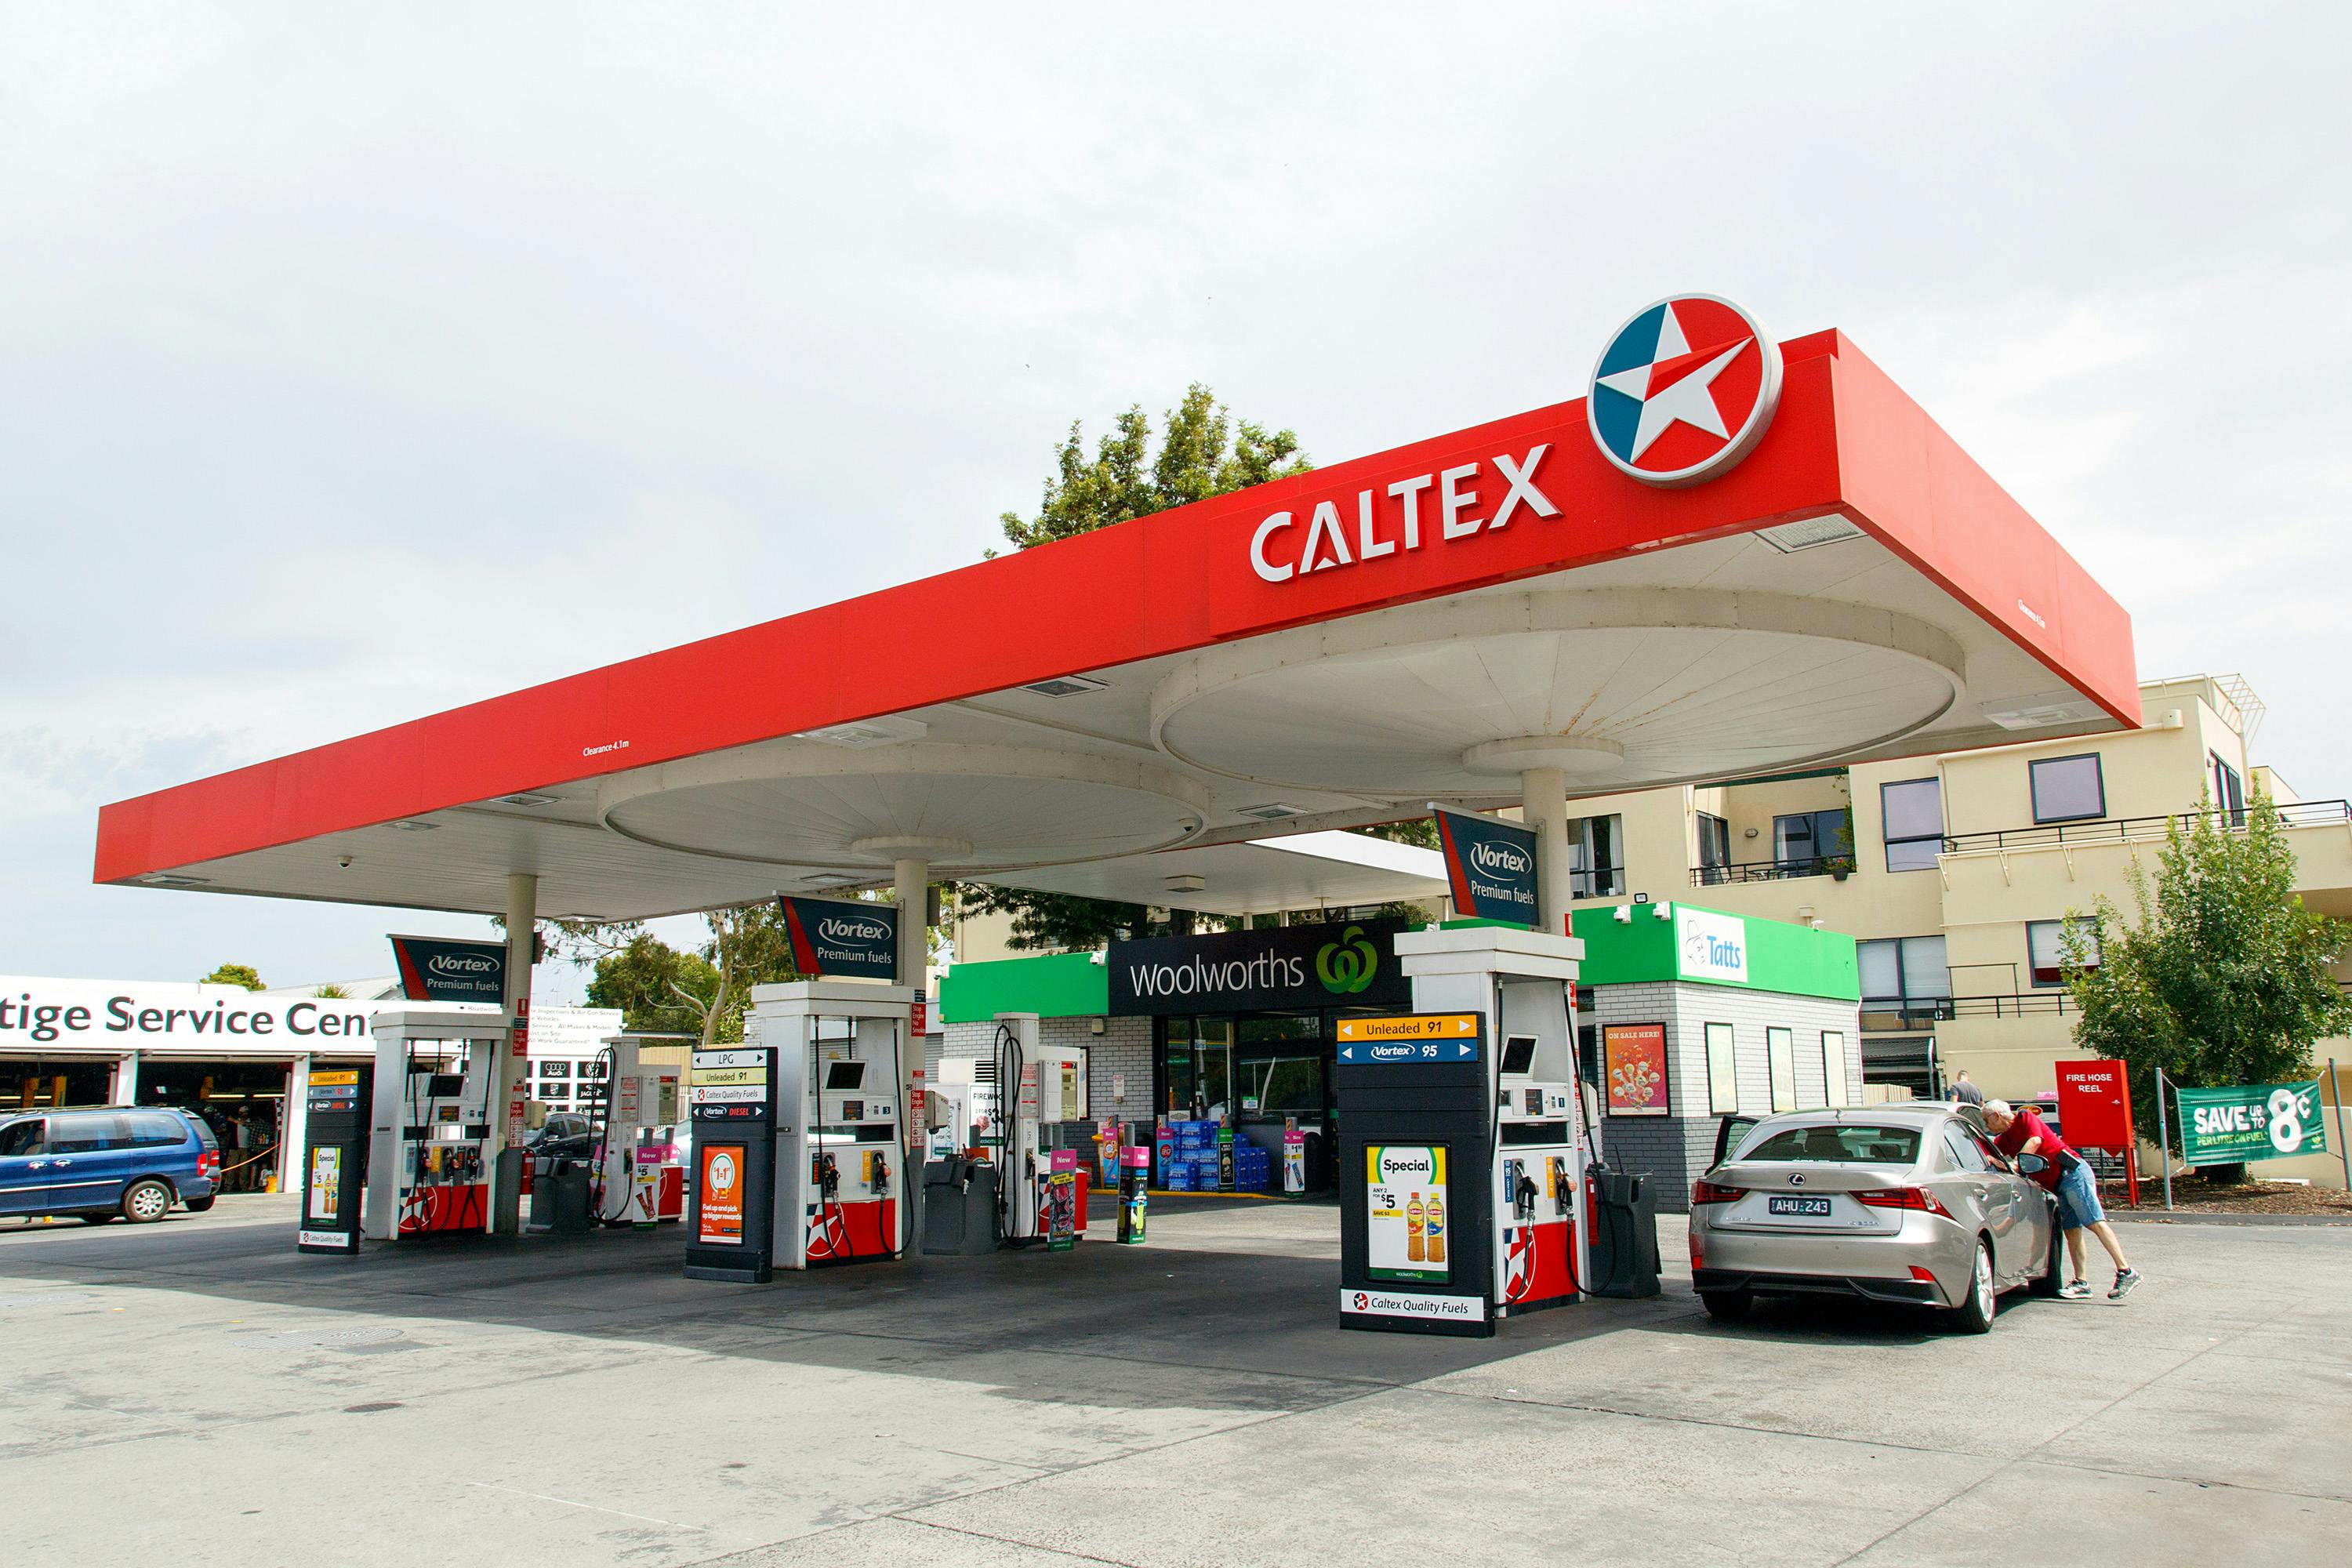 A caltex branded service station